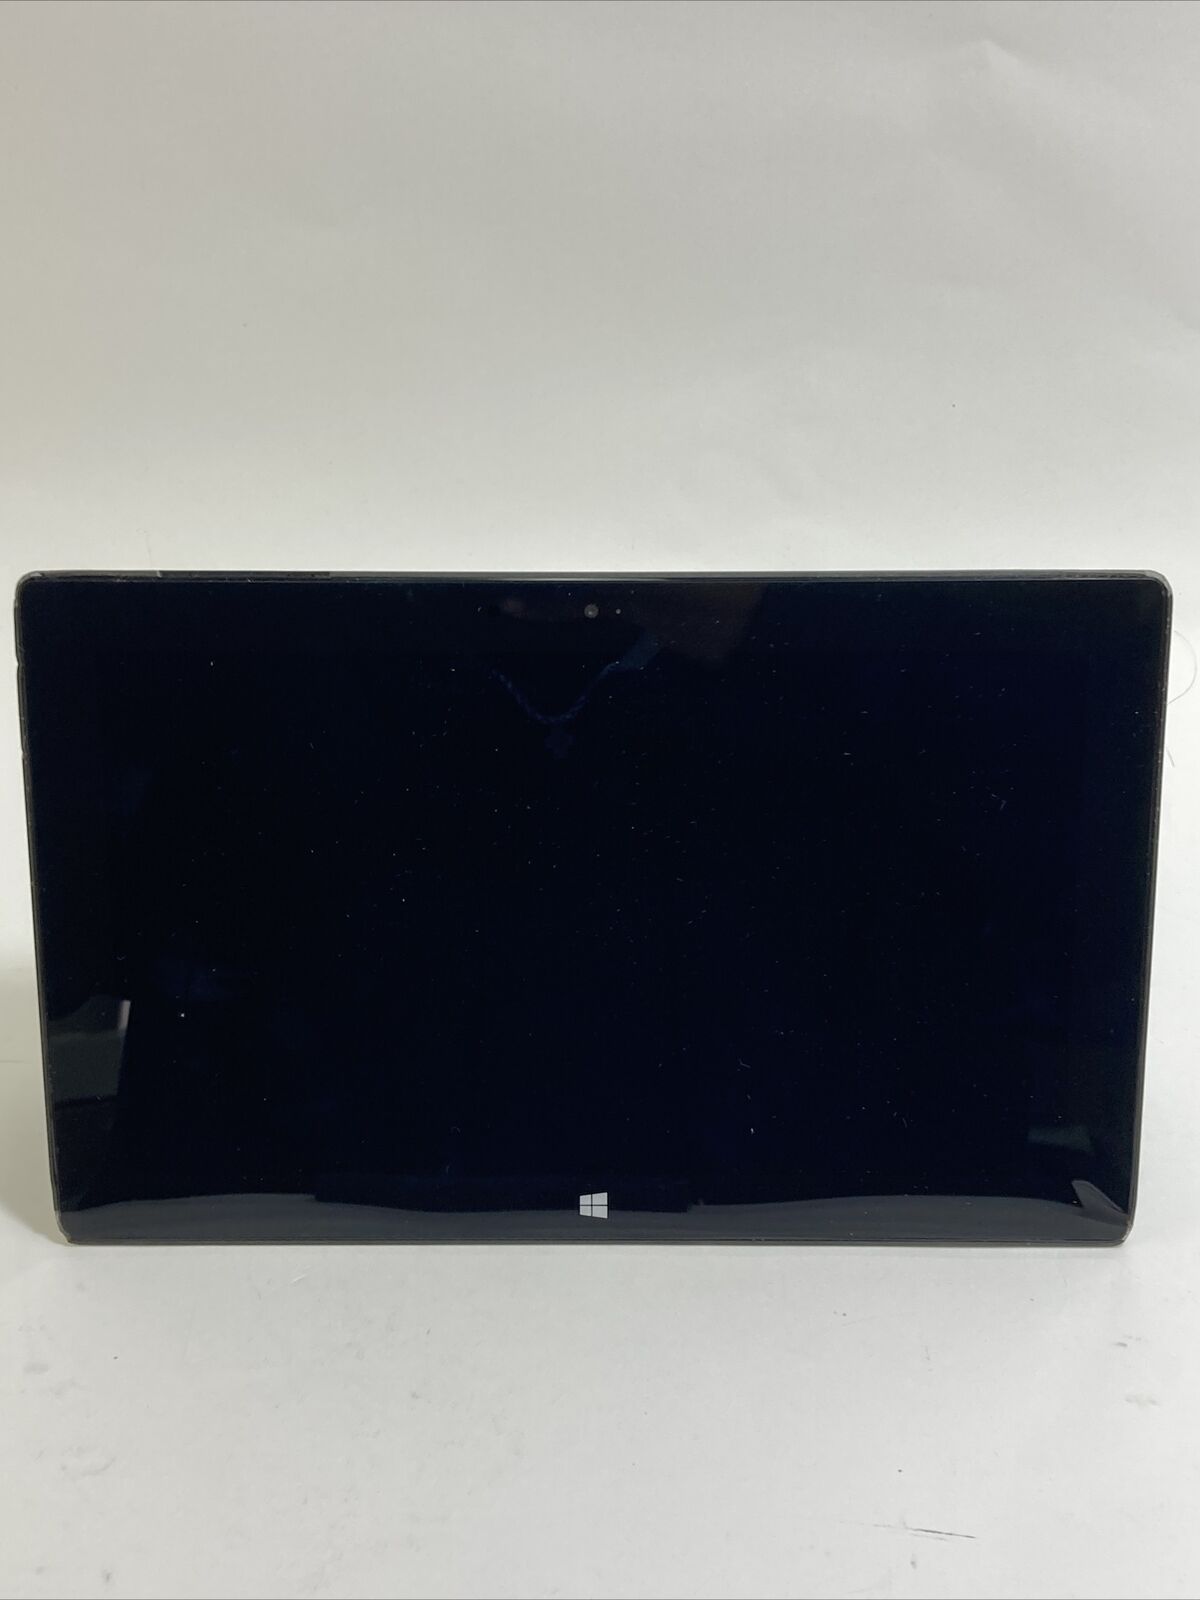 Microsoft Surface RT 32GB Tablet (Read Description)